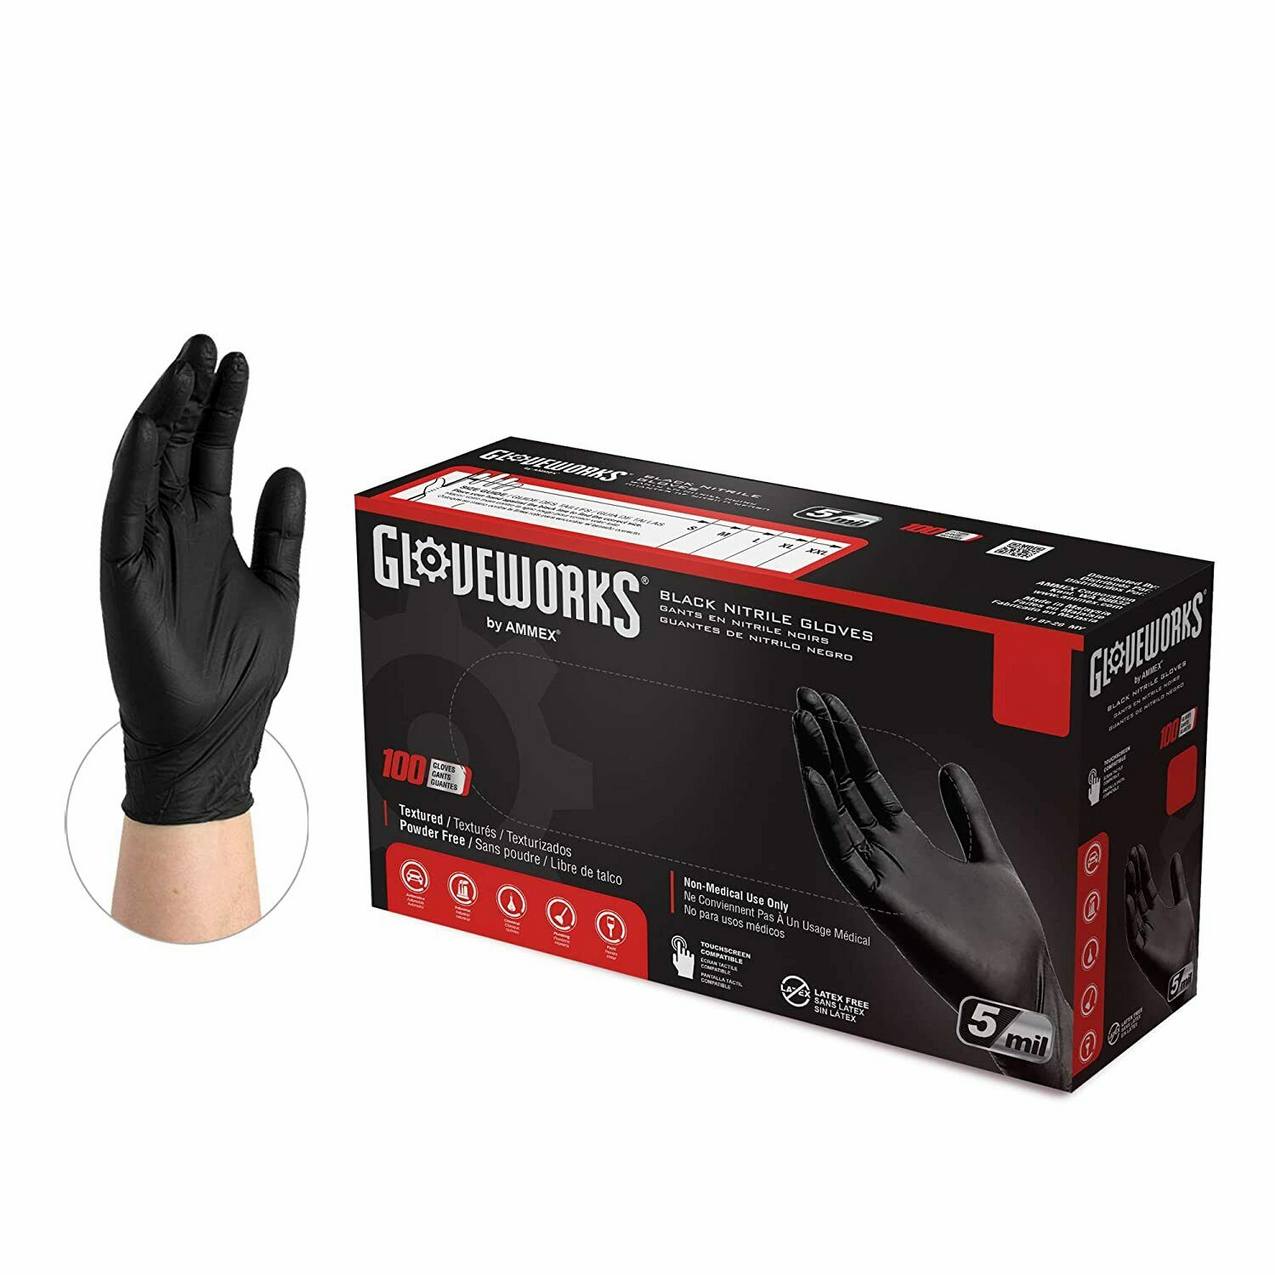 Gloveworks Disposable Nitrile Gloves - Black - Large Box of 100